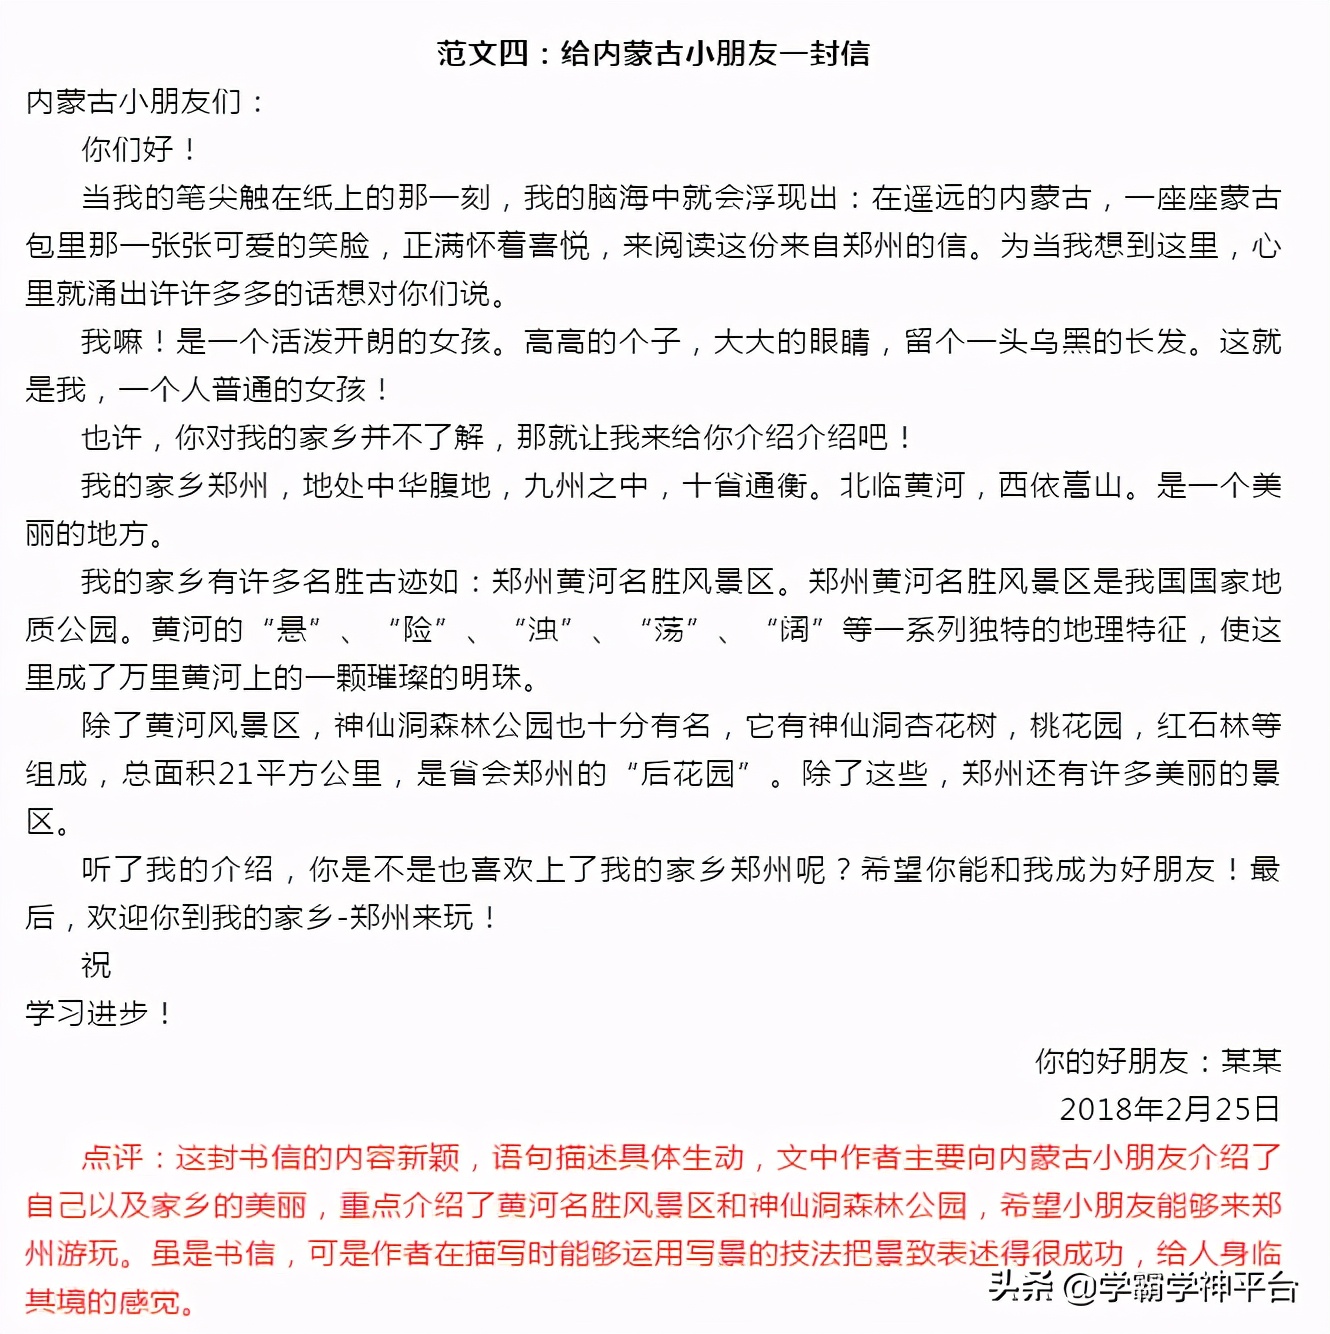 Elsevier 投稿模板使用说明 - 中文翻译版发布 - LaTeX科技排版工作室